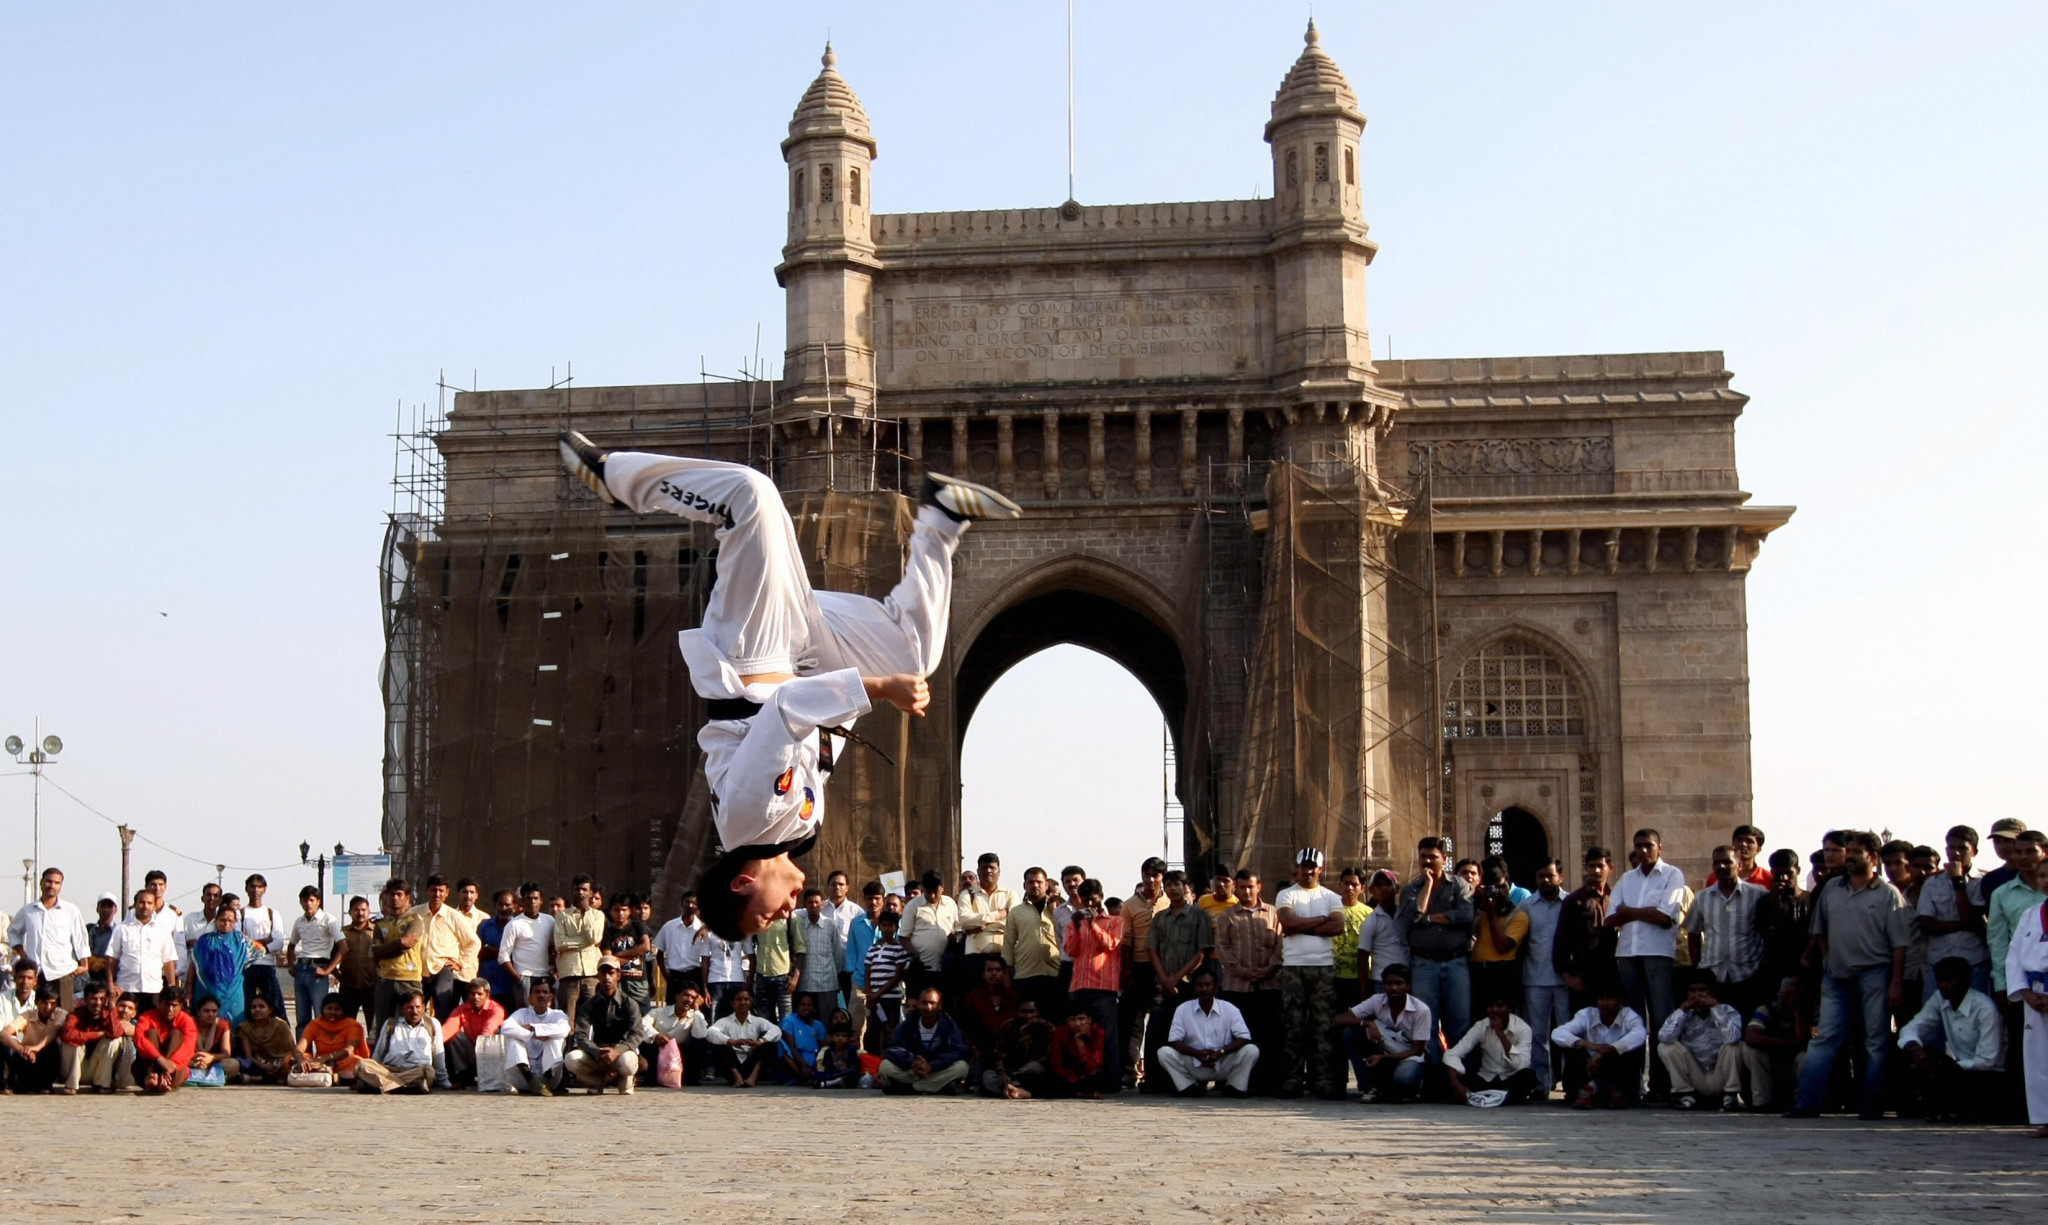 Franchise based taekwondo league due to launch in India